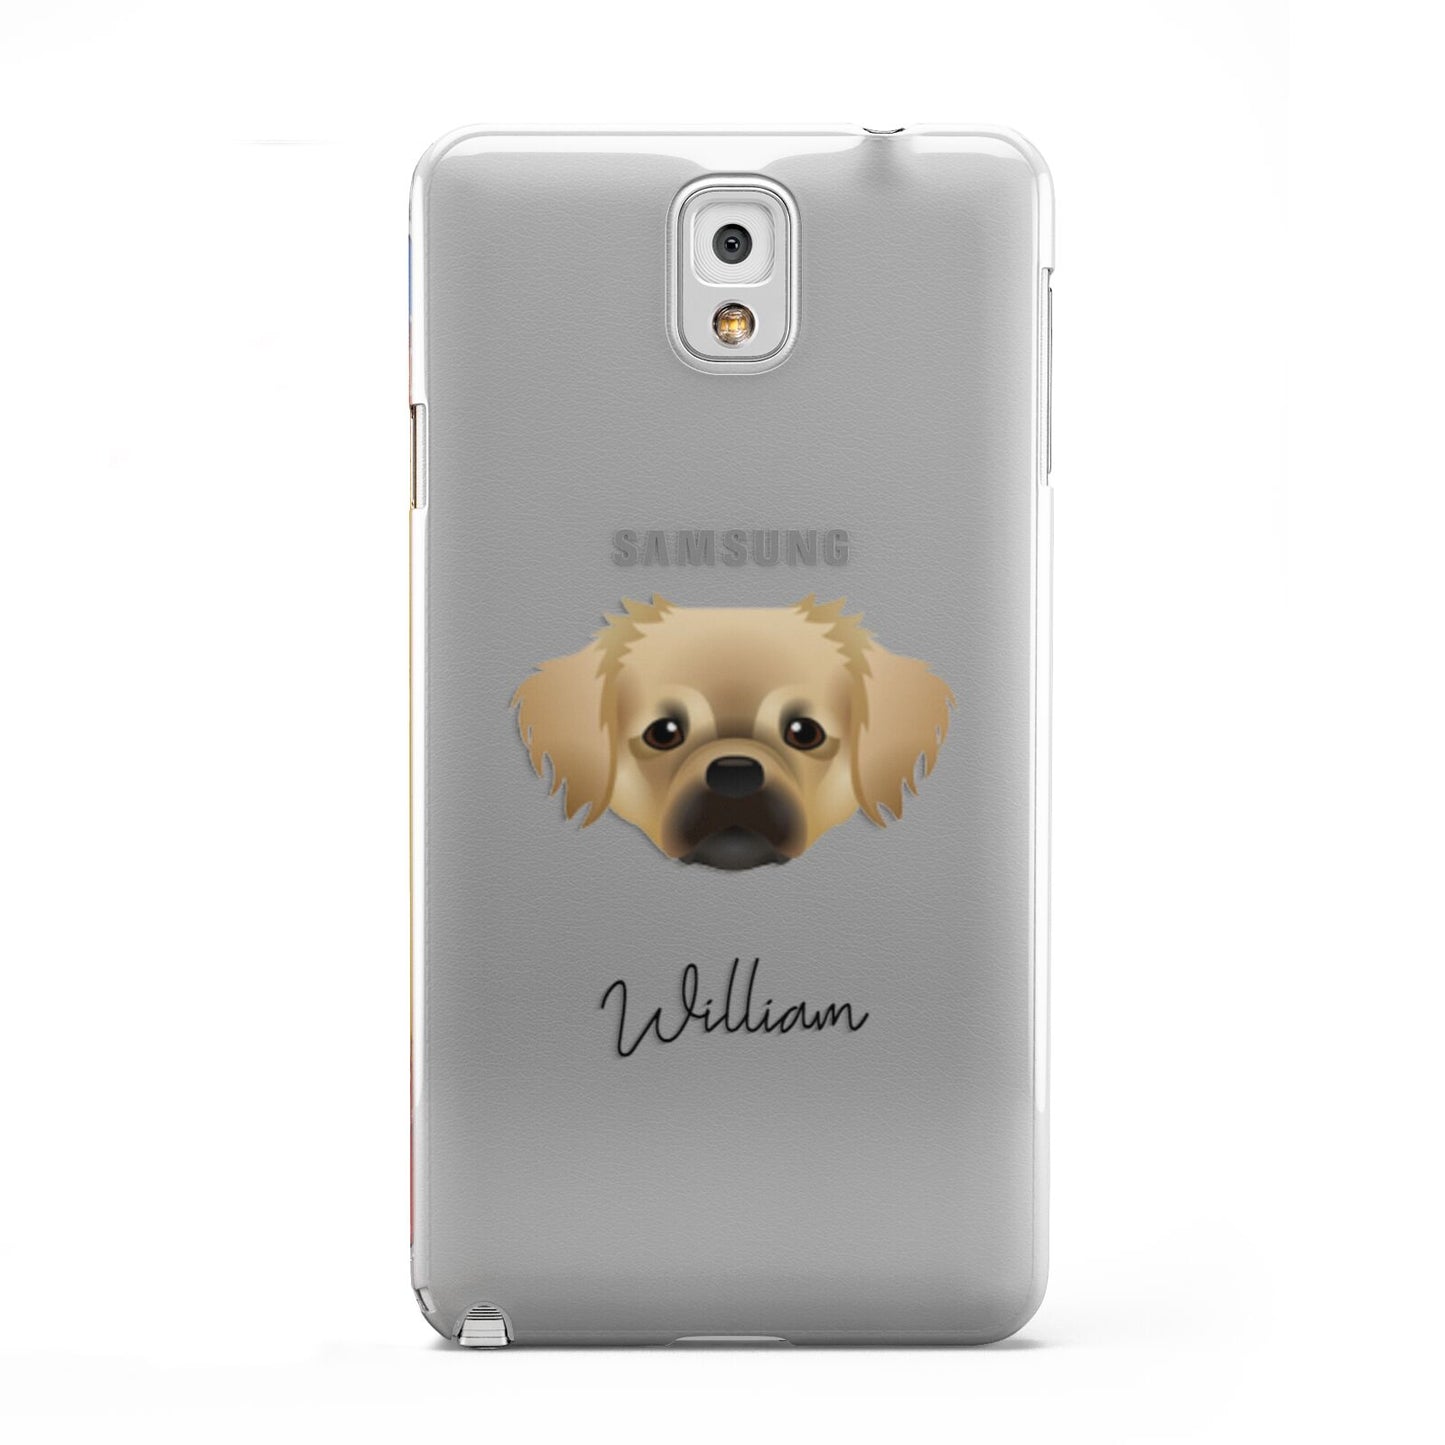 Tibetan Spaniel Personalised Samsung Galaxy Note 3 Case